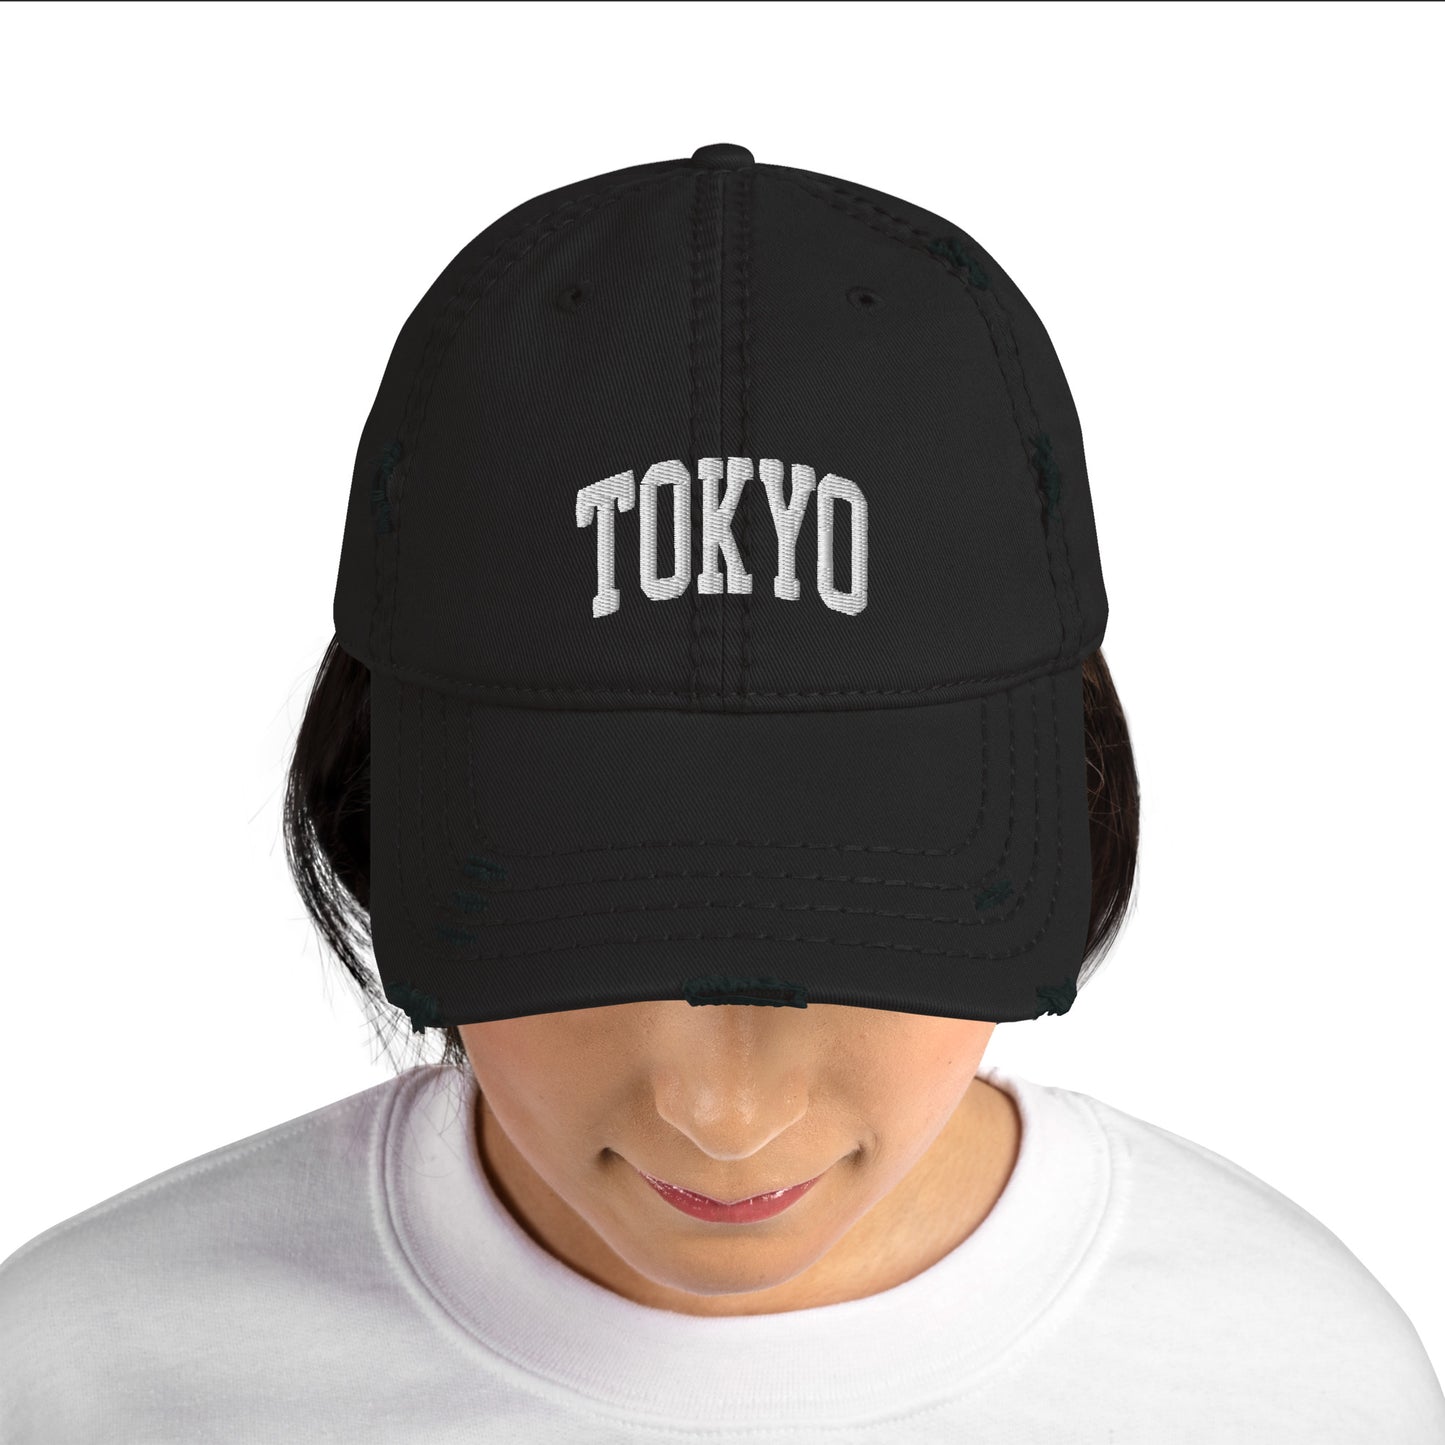 Tokyo Japan College Style Vintage Inspired Distressed Dad Hat